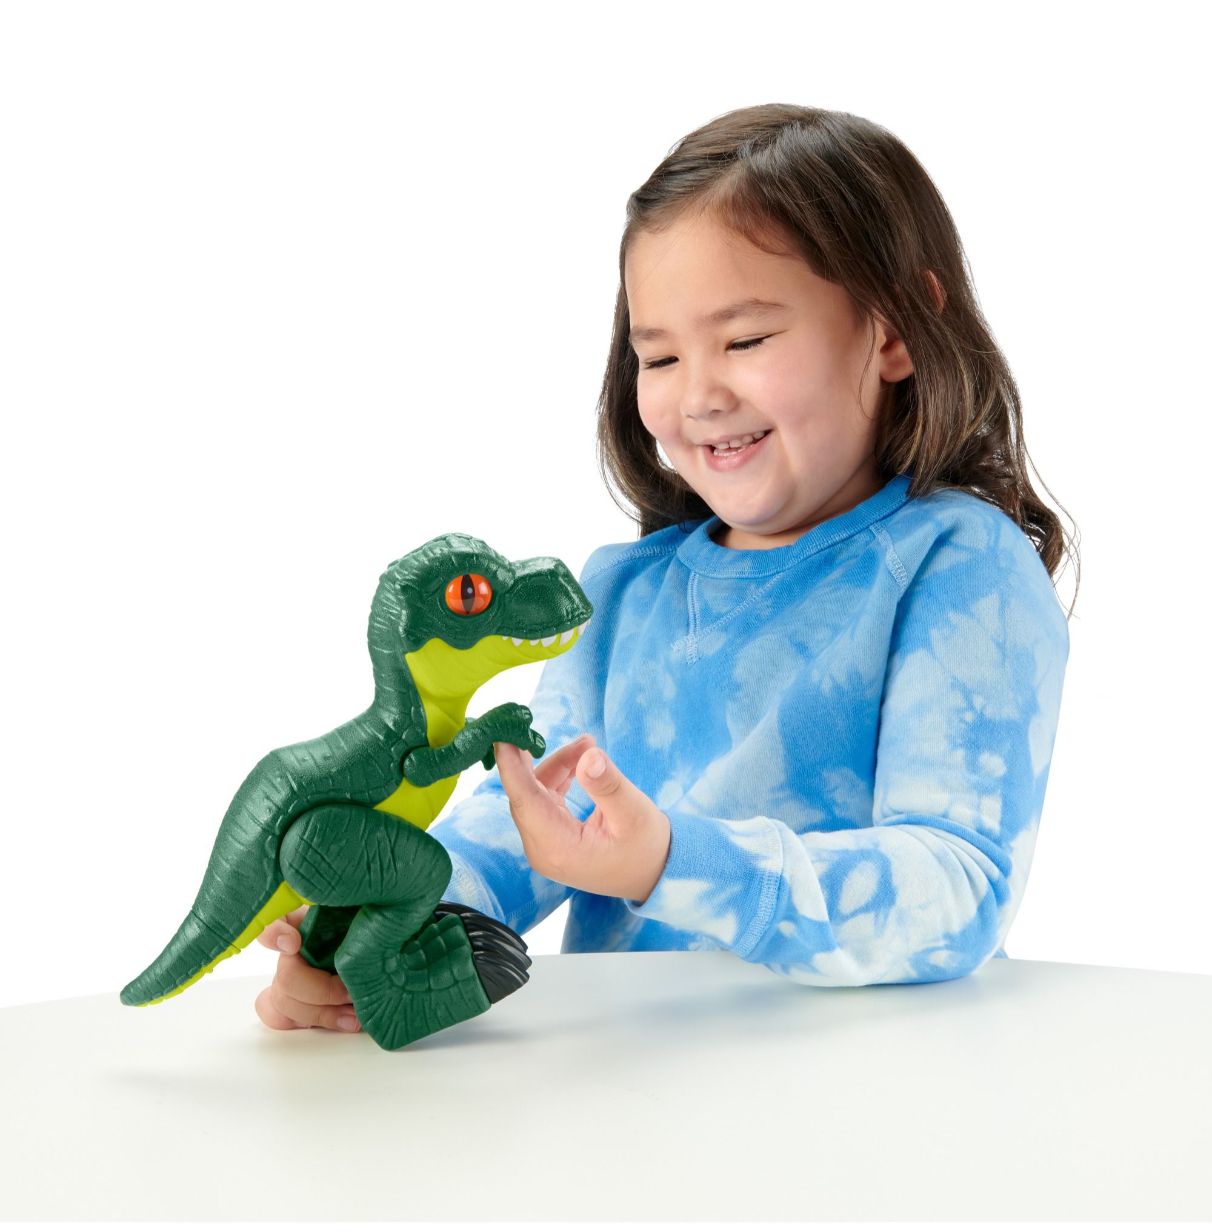 fisher-price imaginext jurassic world 3  dinosaurios xl articulados  de juguete , modelos surtidos para niños +3 años (mattel gw